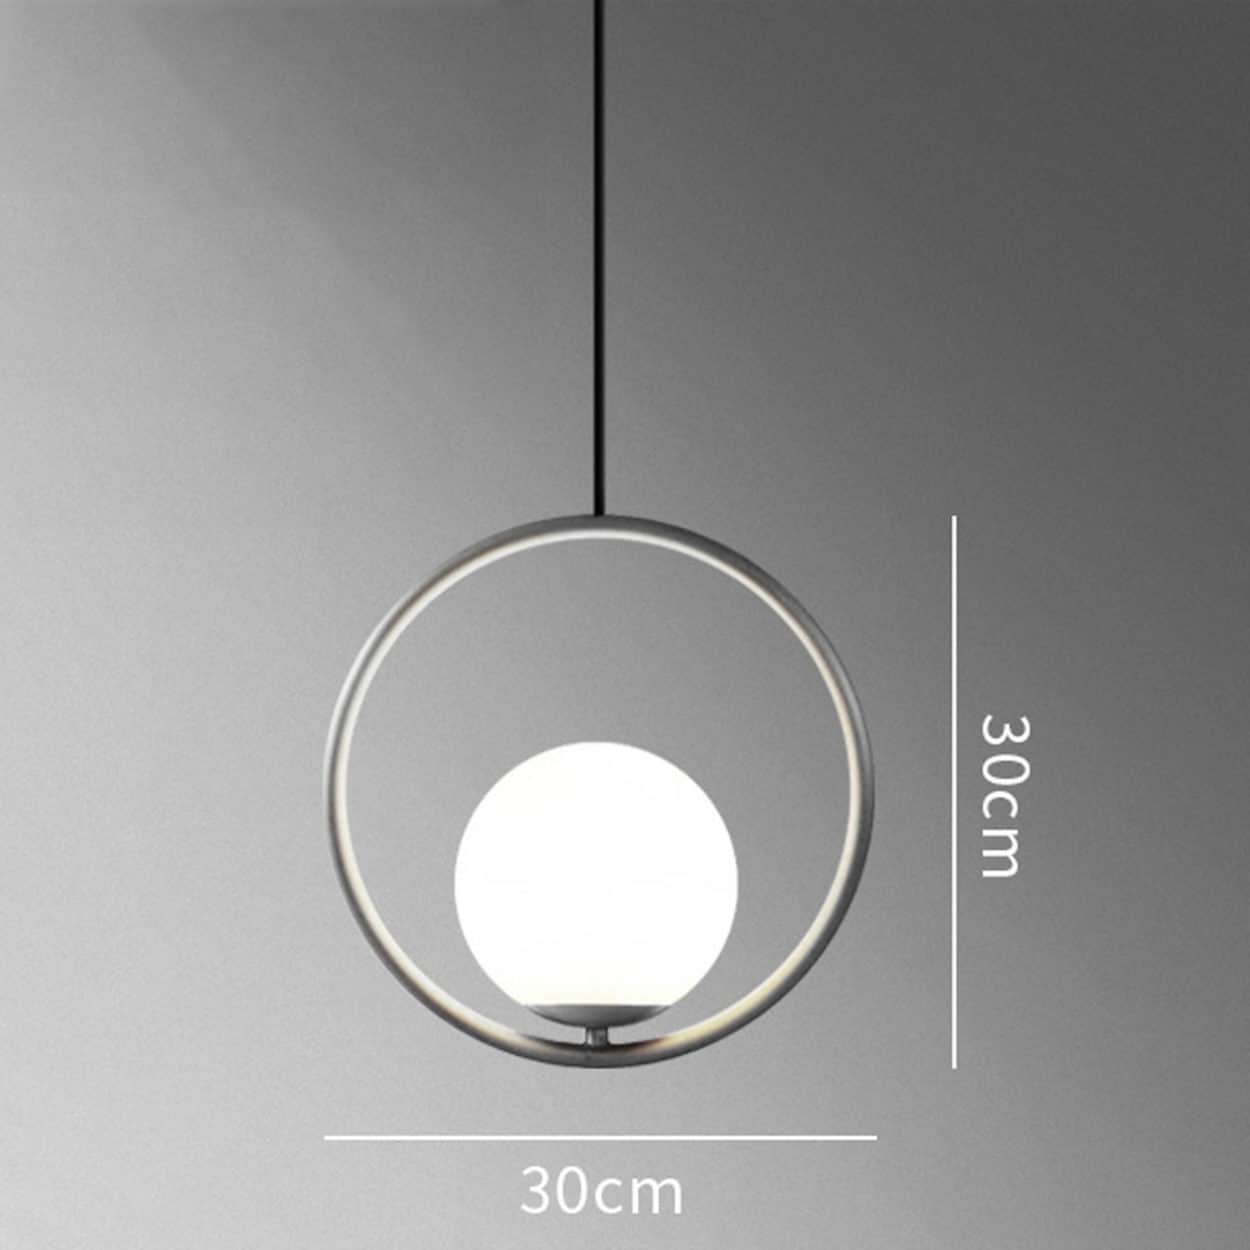 Insuppo Round Ring Ball Pendant Lamp